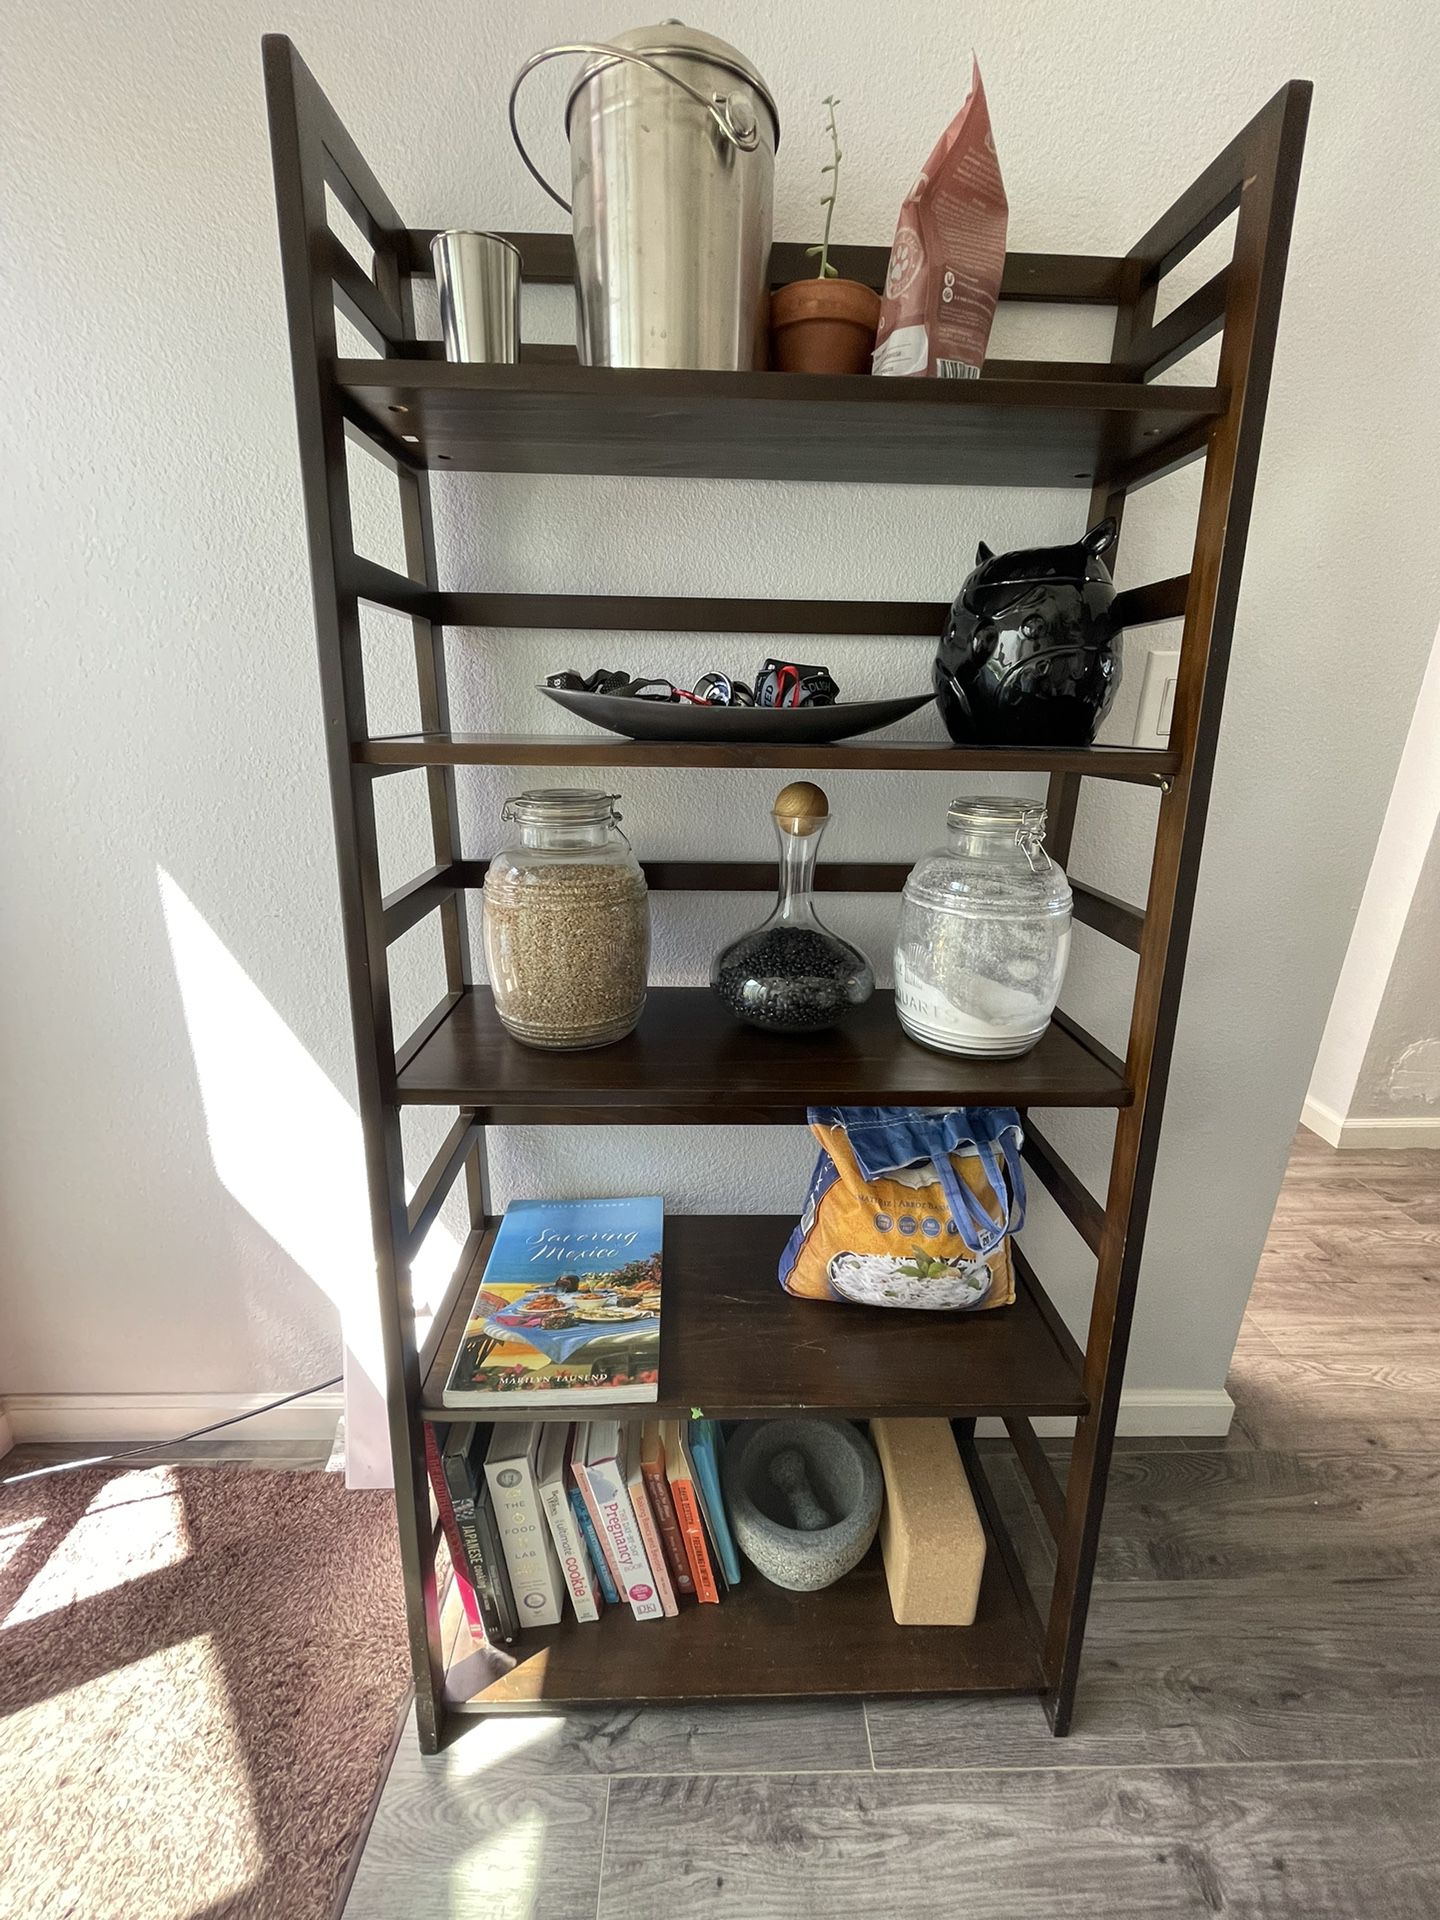 5-shelve Bookshelf